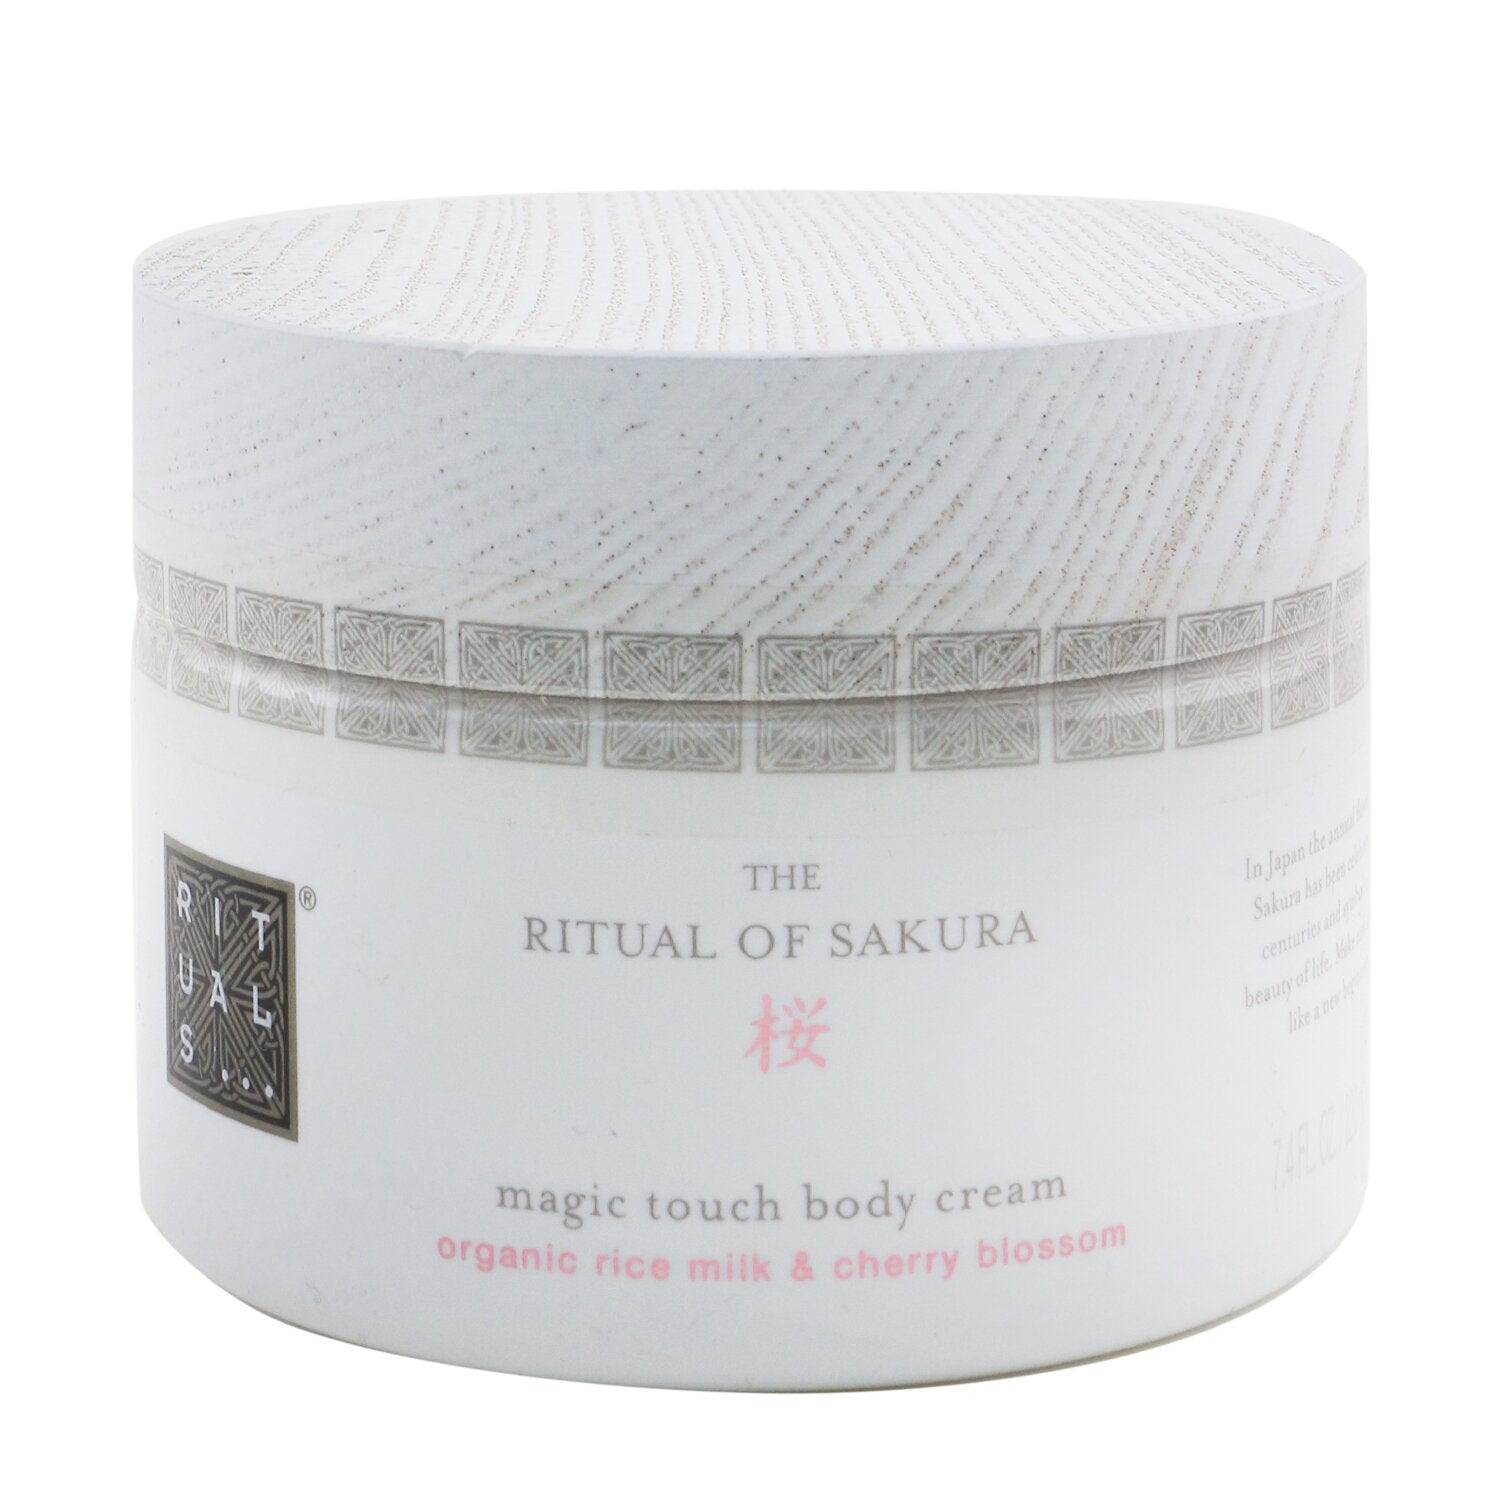 Rituals The ritual of sakura - Magic touch body cream - 70ml